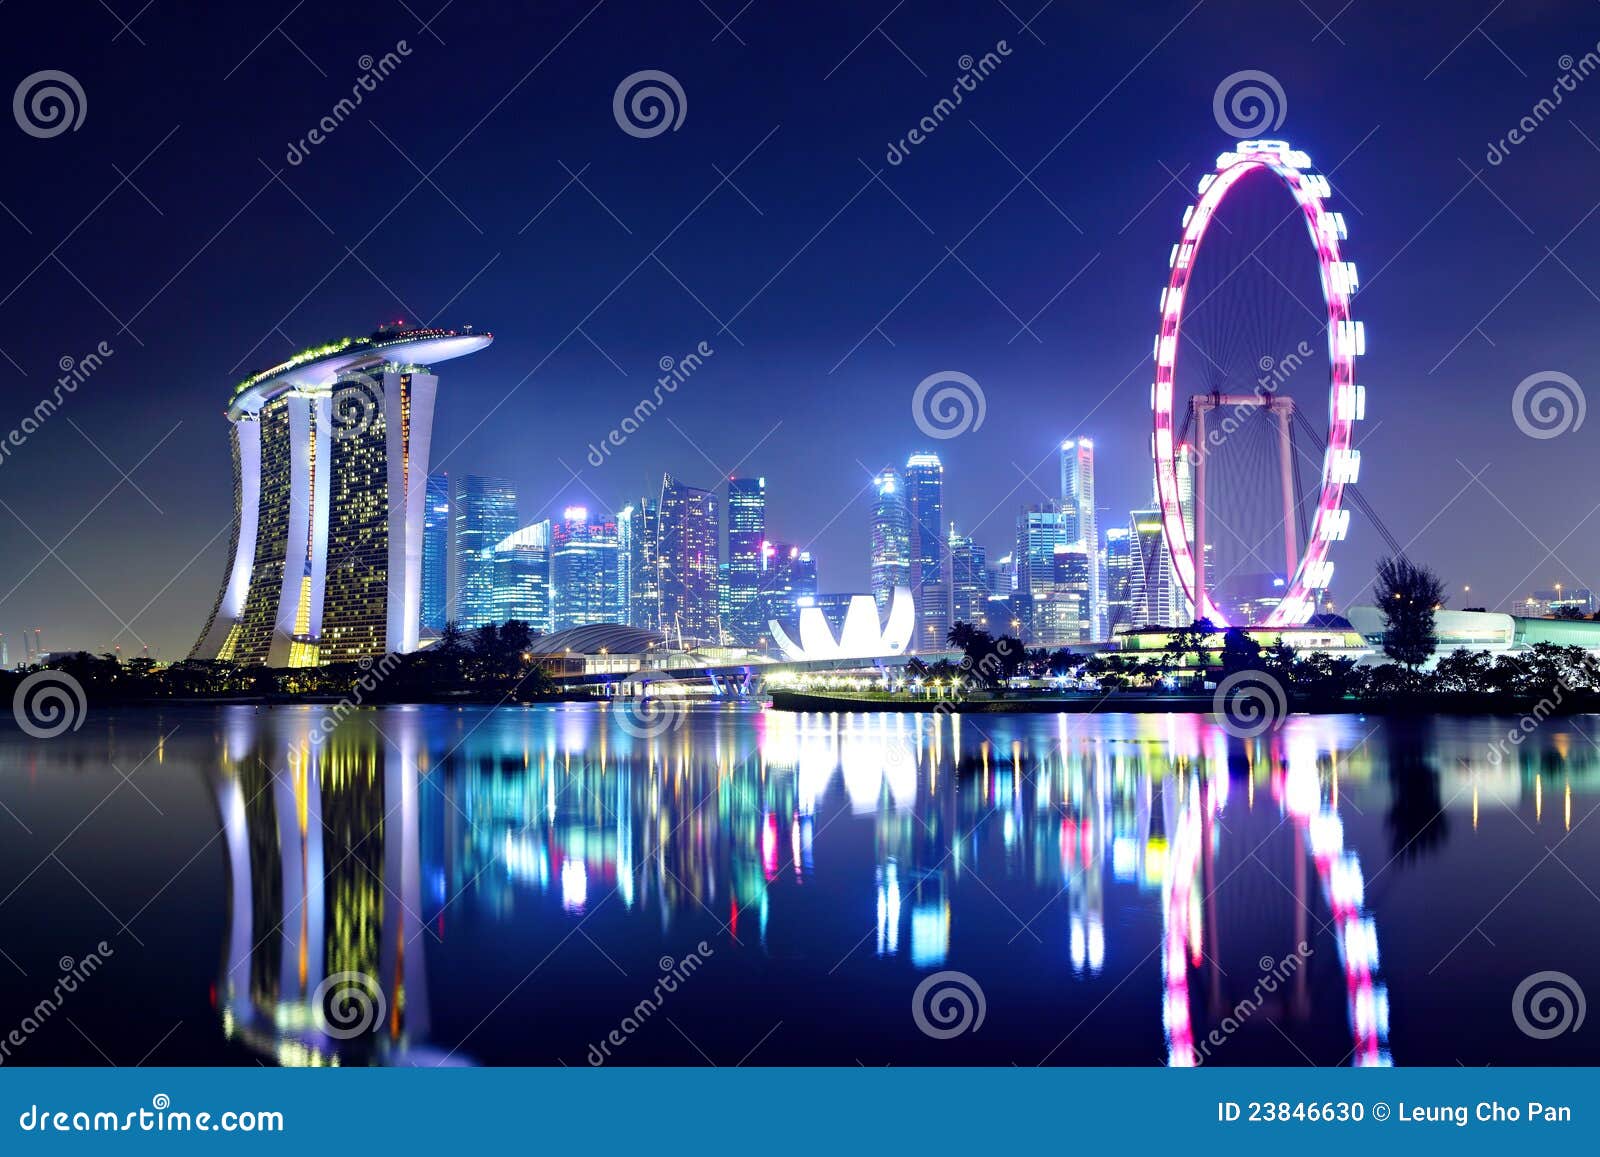 Singapore Singapore June 23 2018 Crystal Stock Photo 1271528779